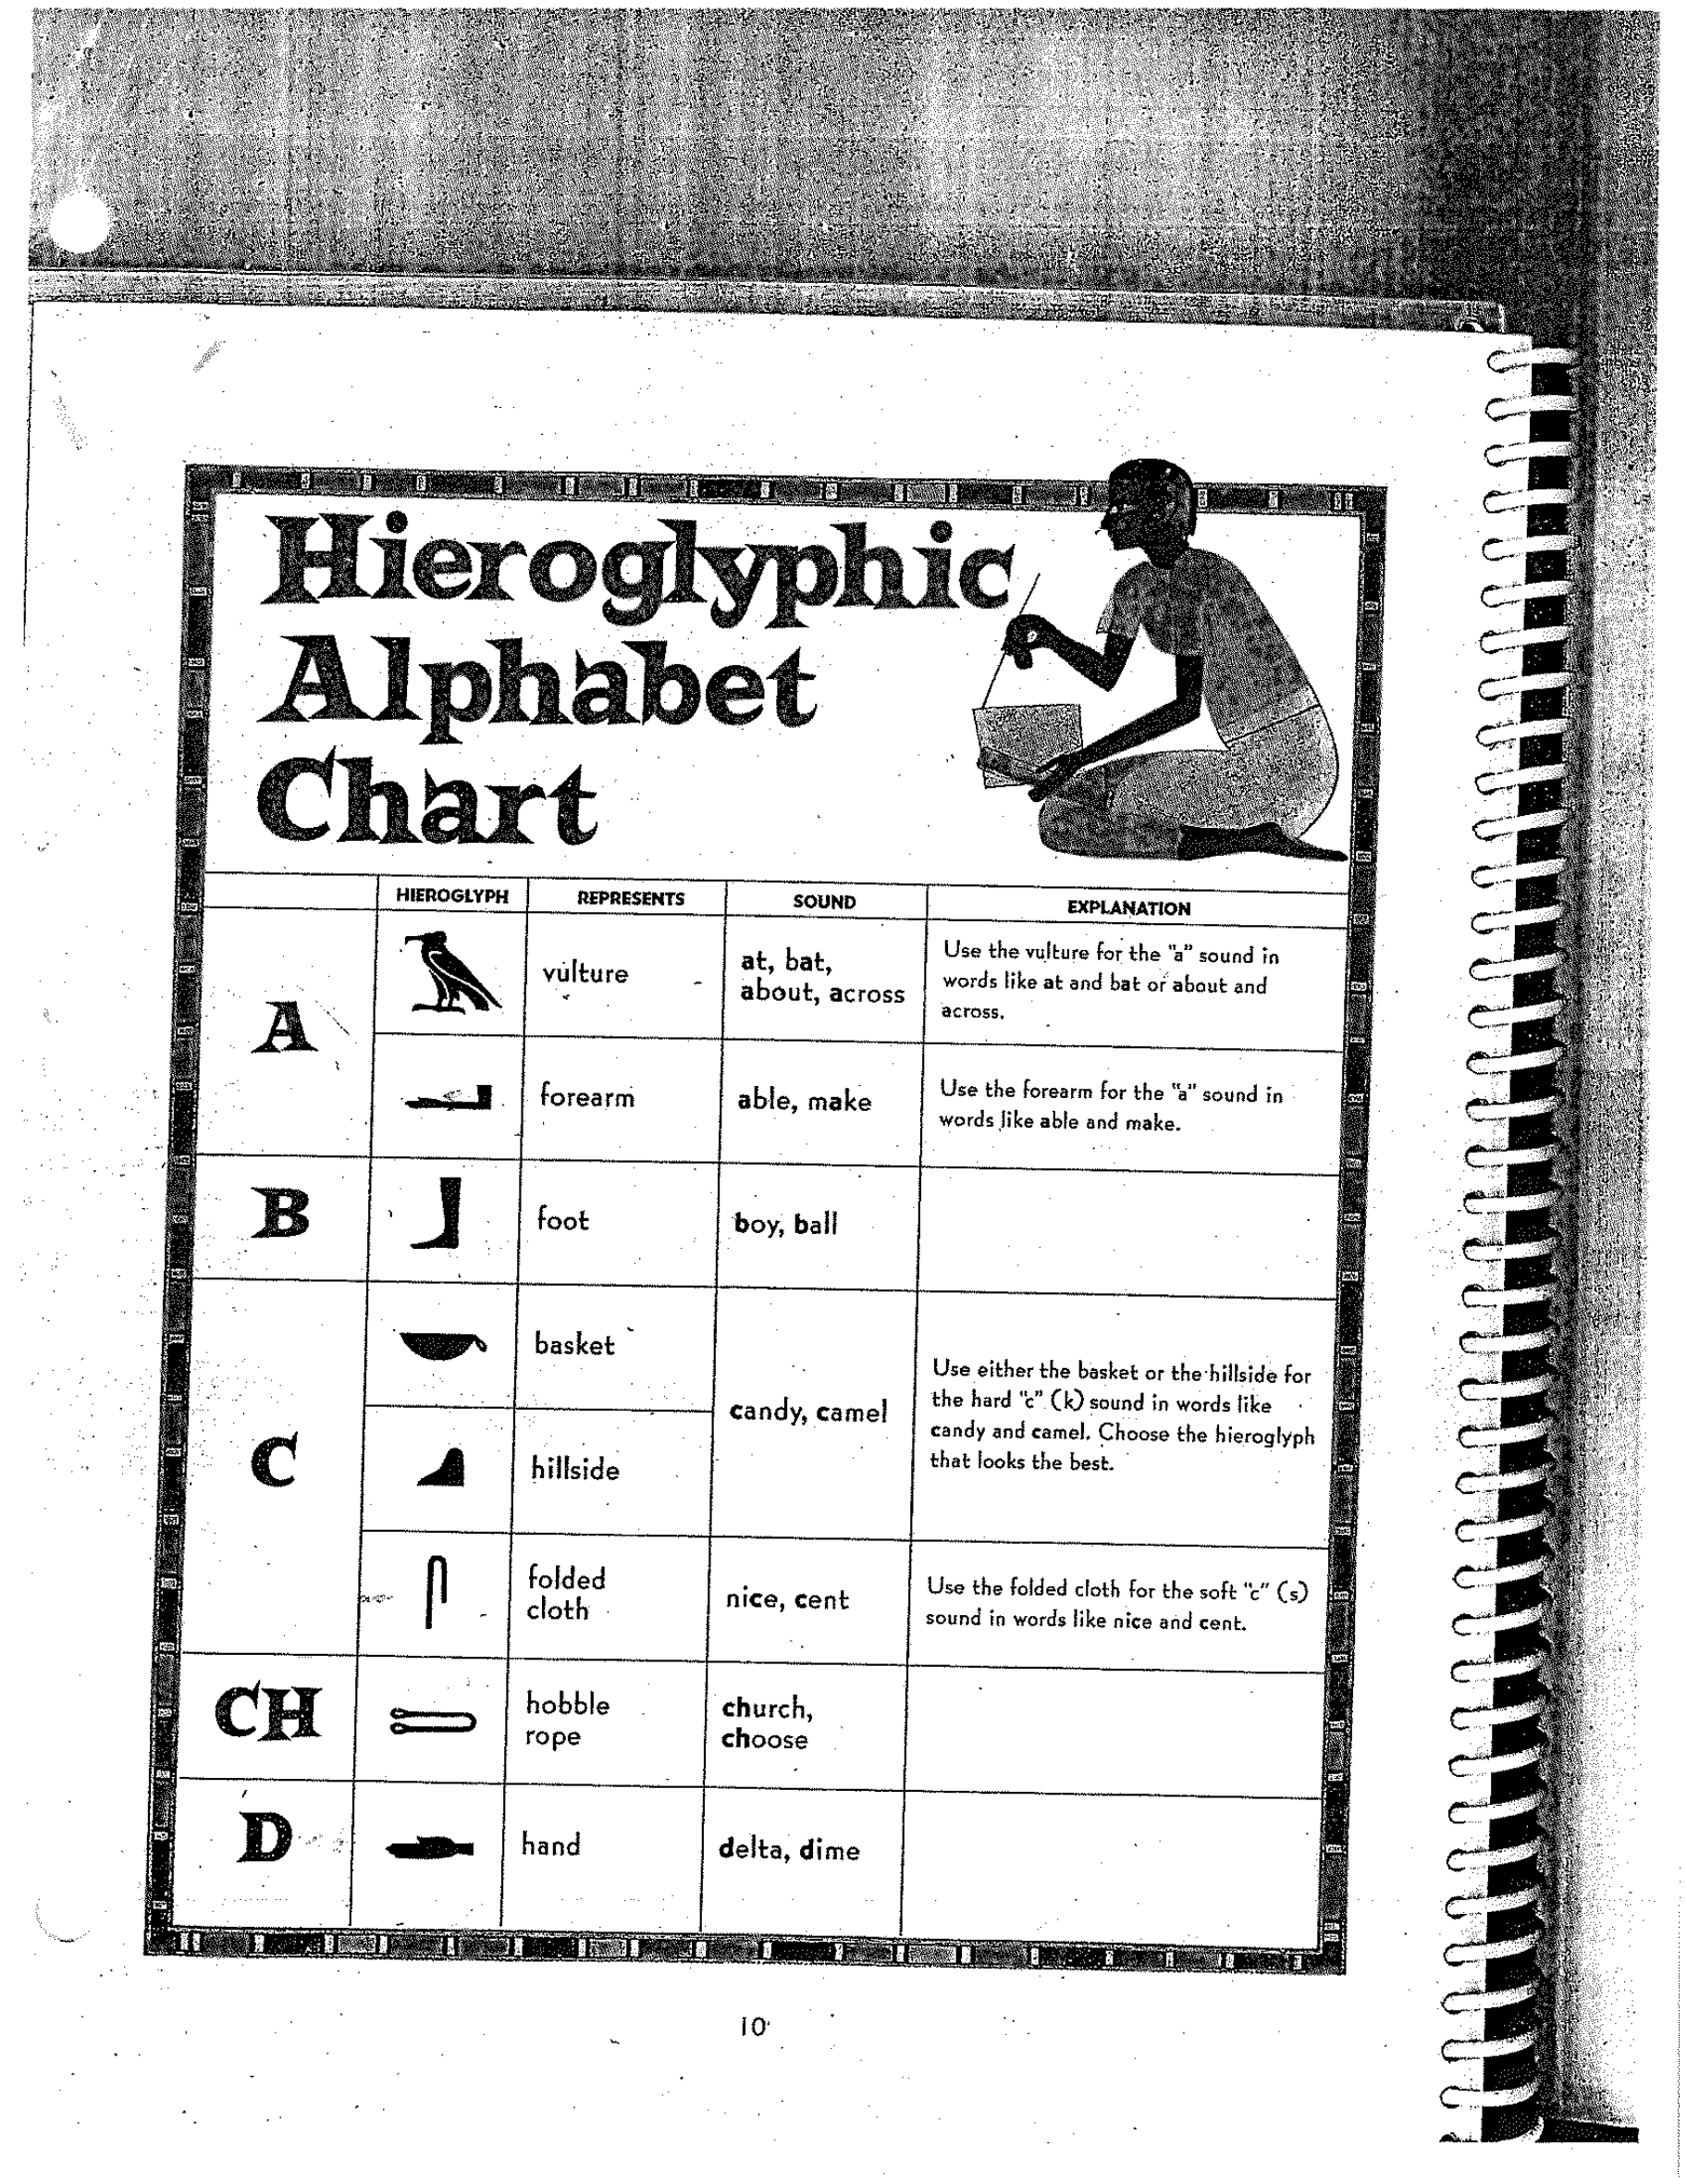 hieroglyphic-alphabet-chart-sample-edit-fill-sign-online-handypdf